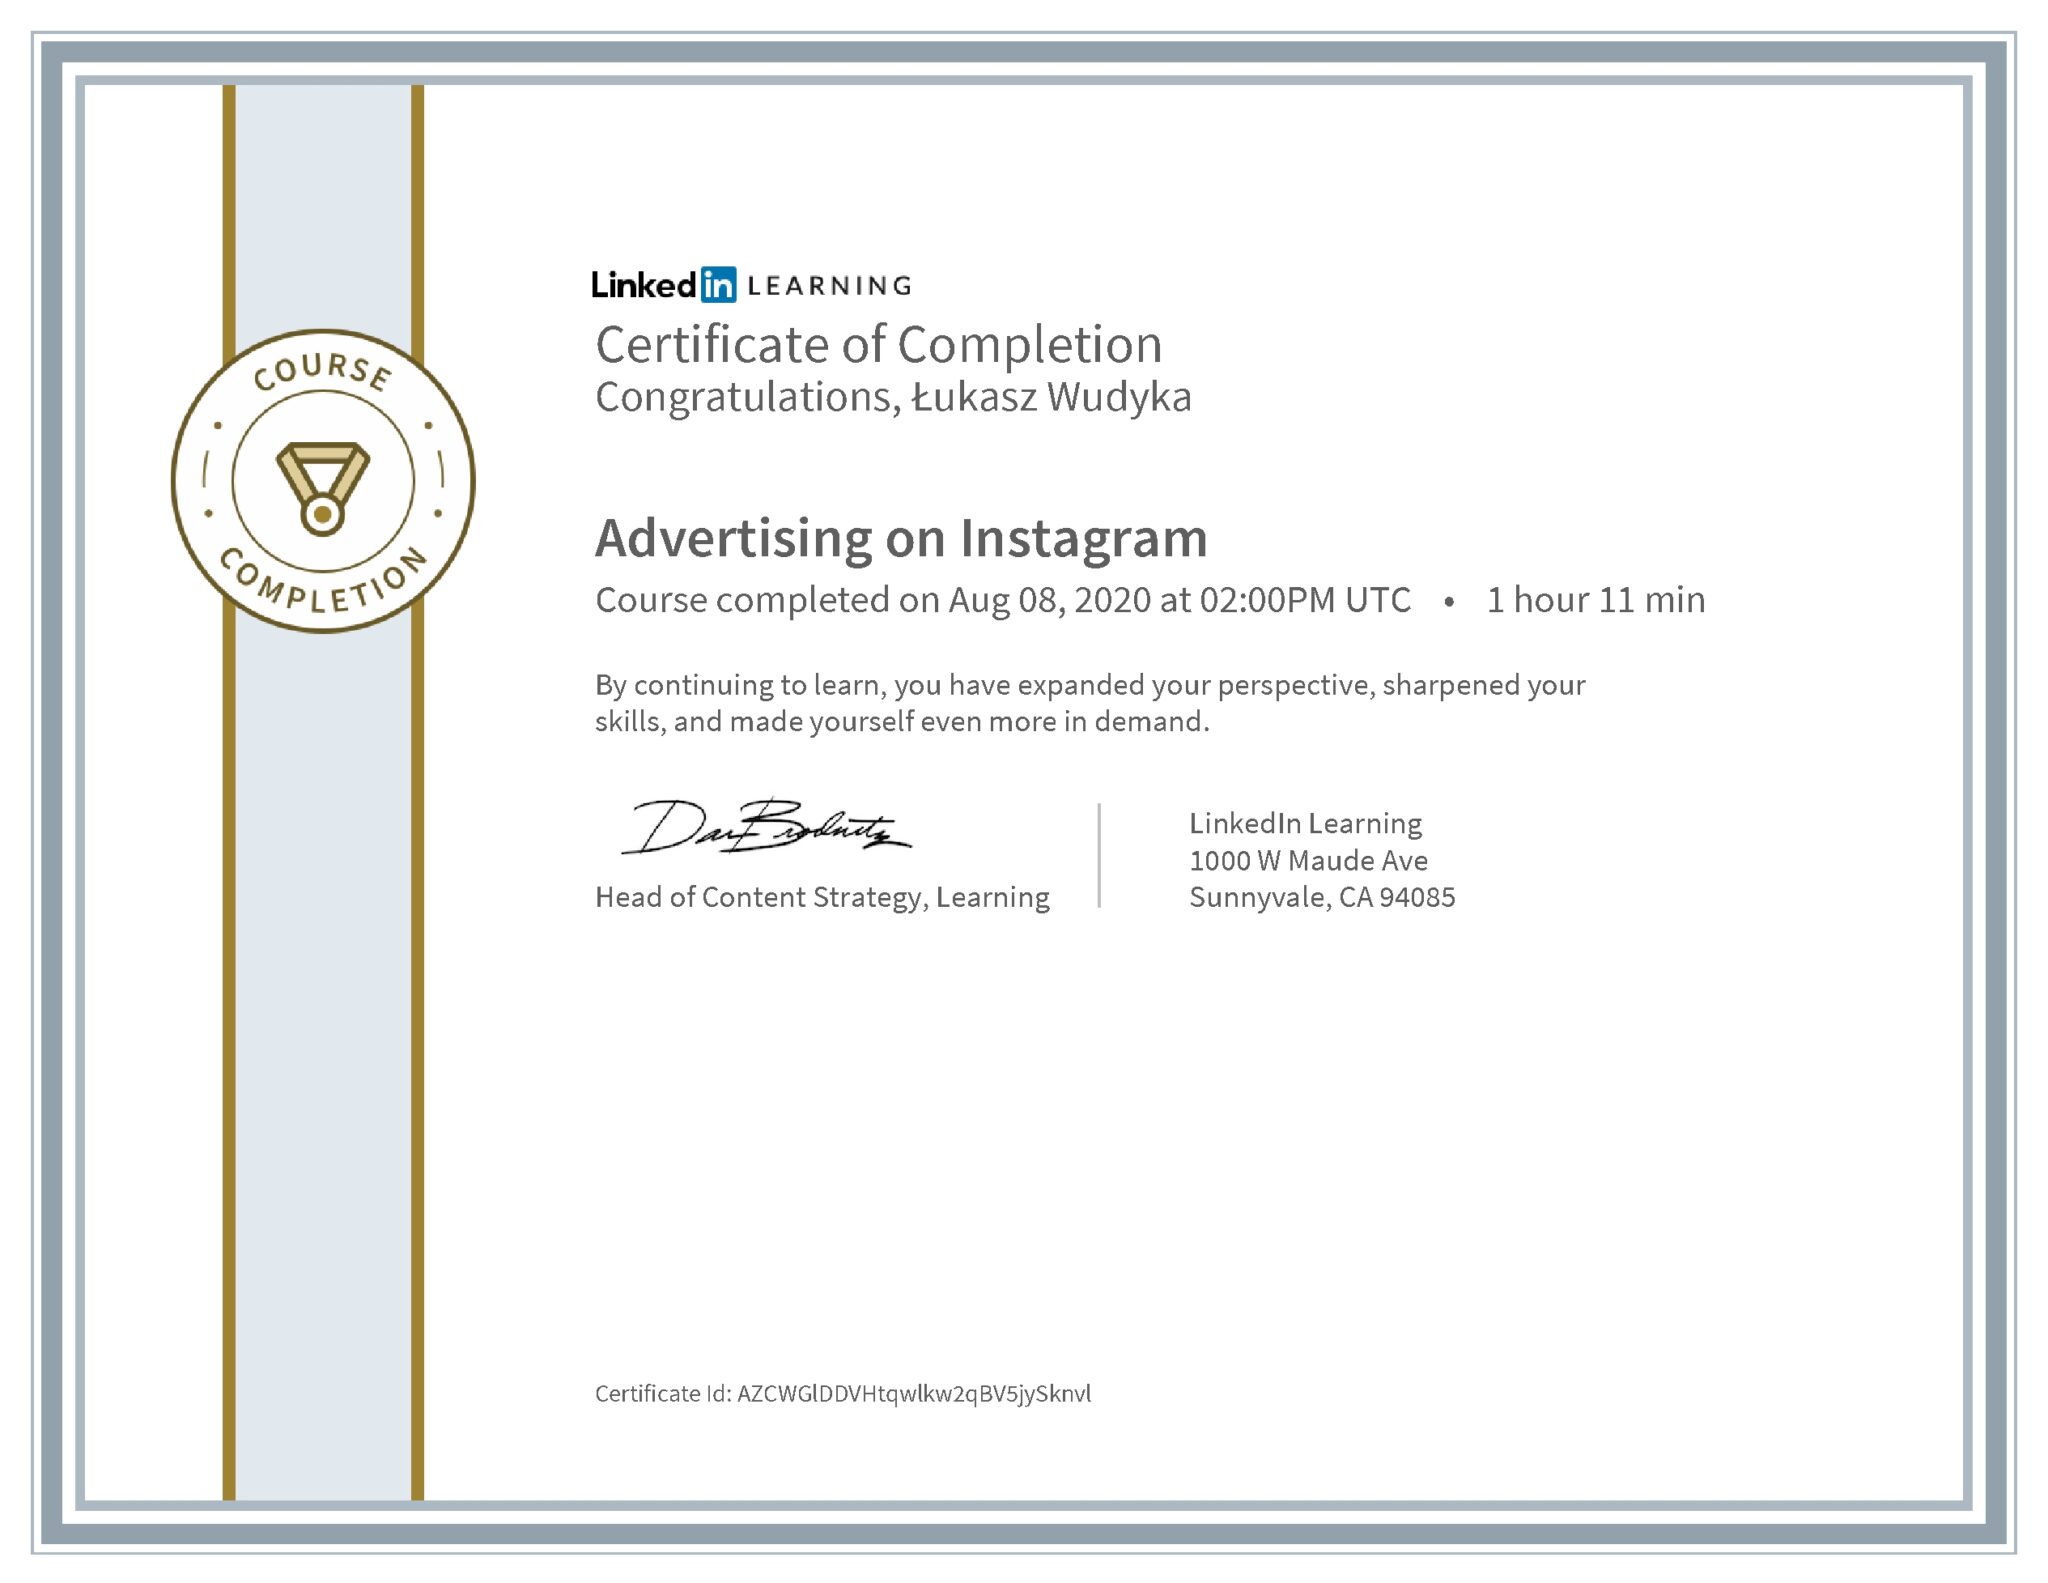 Łukasz Wudyka certyfikat LinkedIn Advertising on Instagram